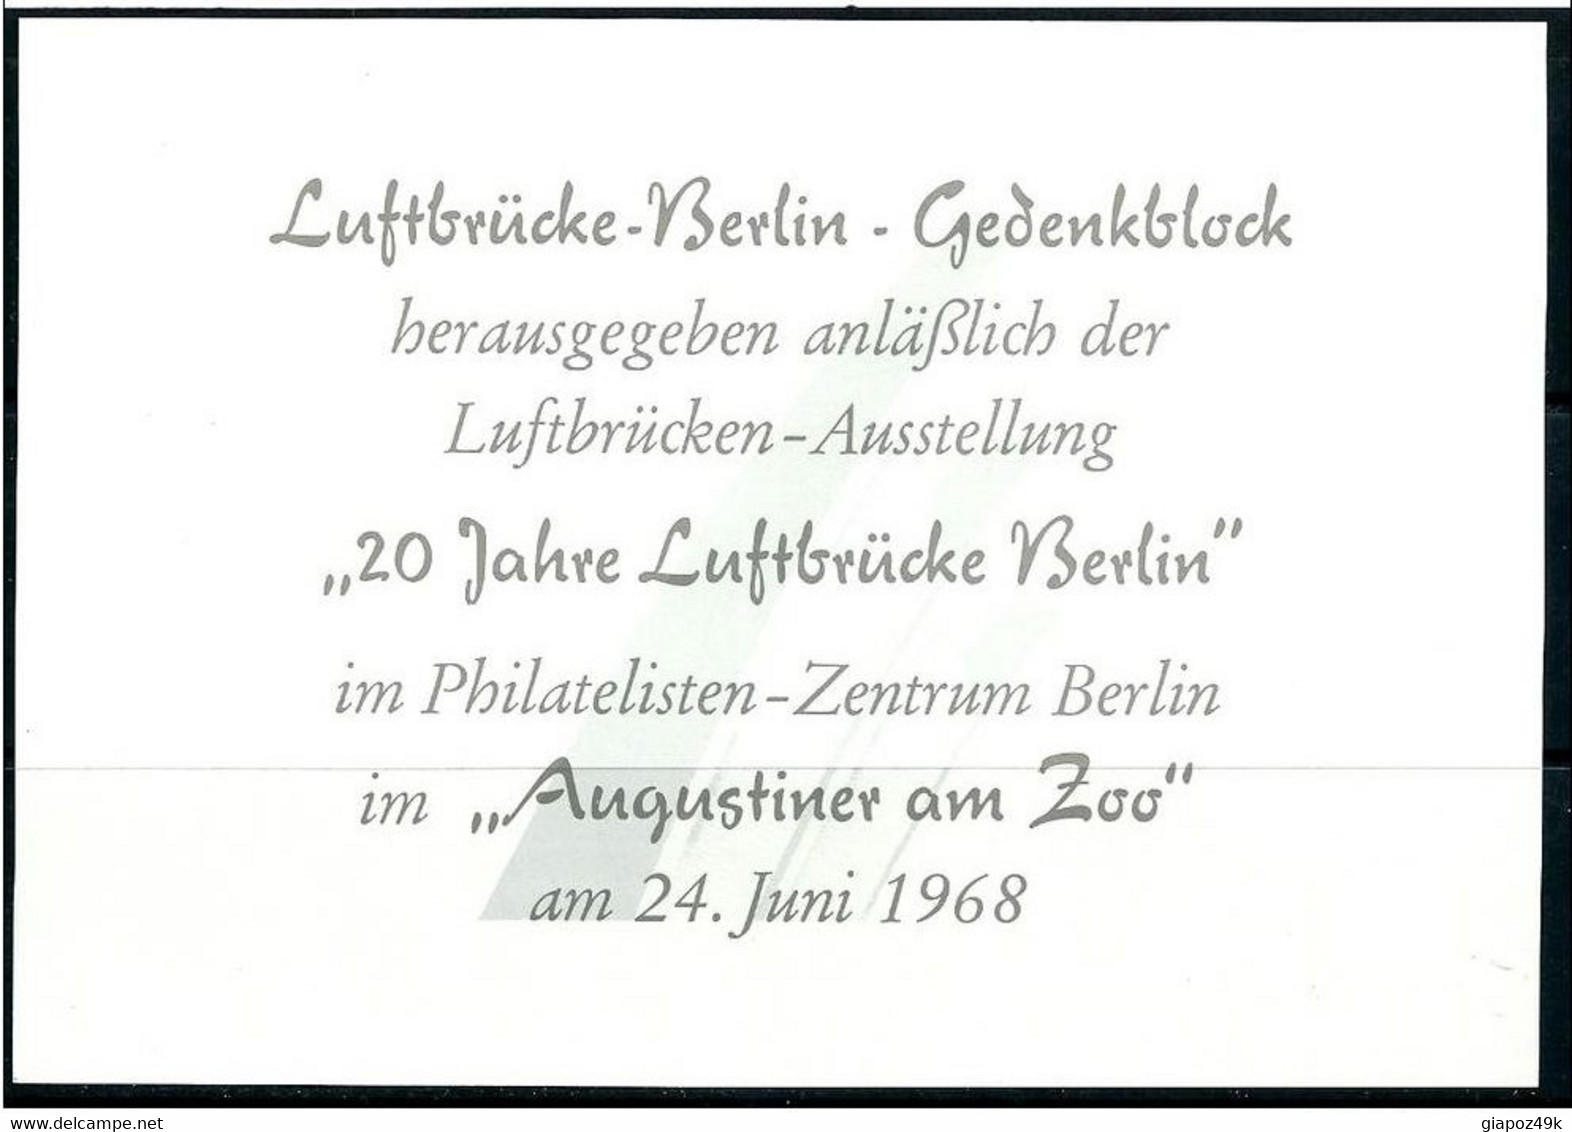 ● GERMANIA BERLIN 1958 ?  BURGHERMEISTER  Erinnofilia  Nuovo ** ️ Lotto N. 4724 ️ - R- & V- Labels